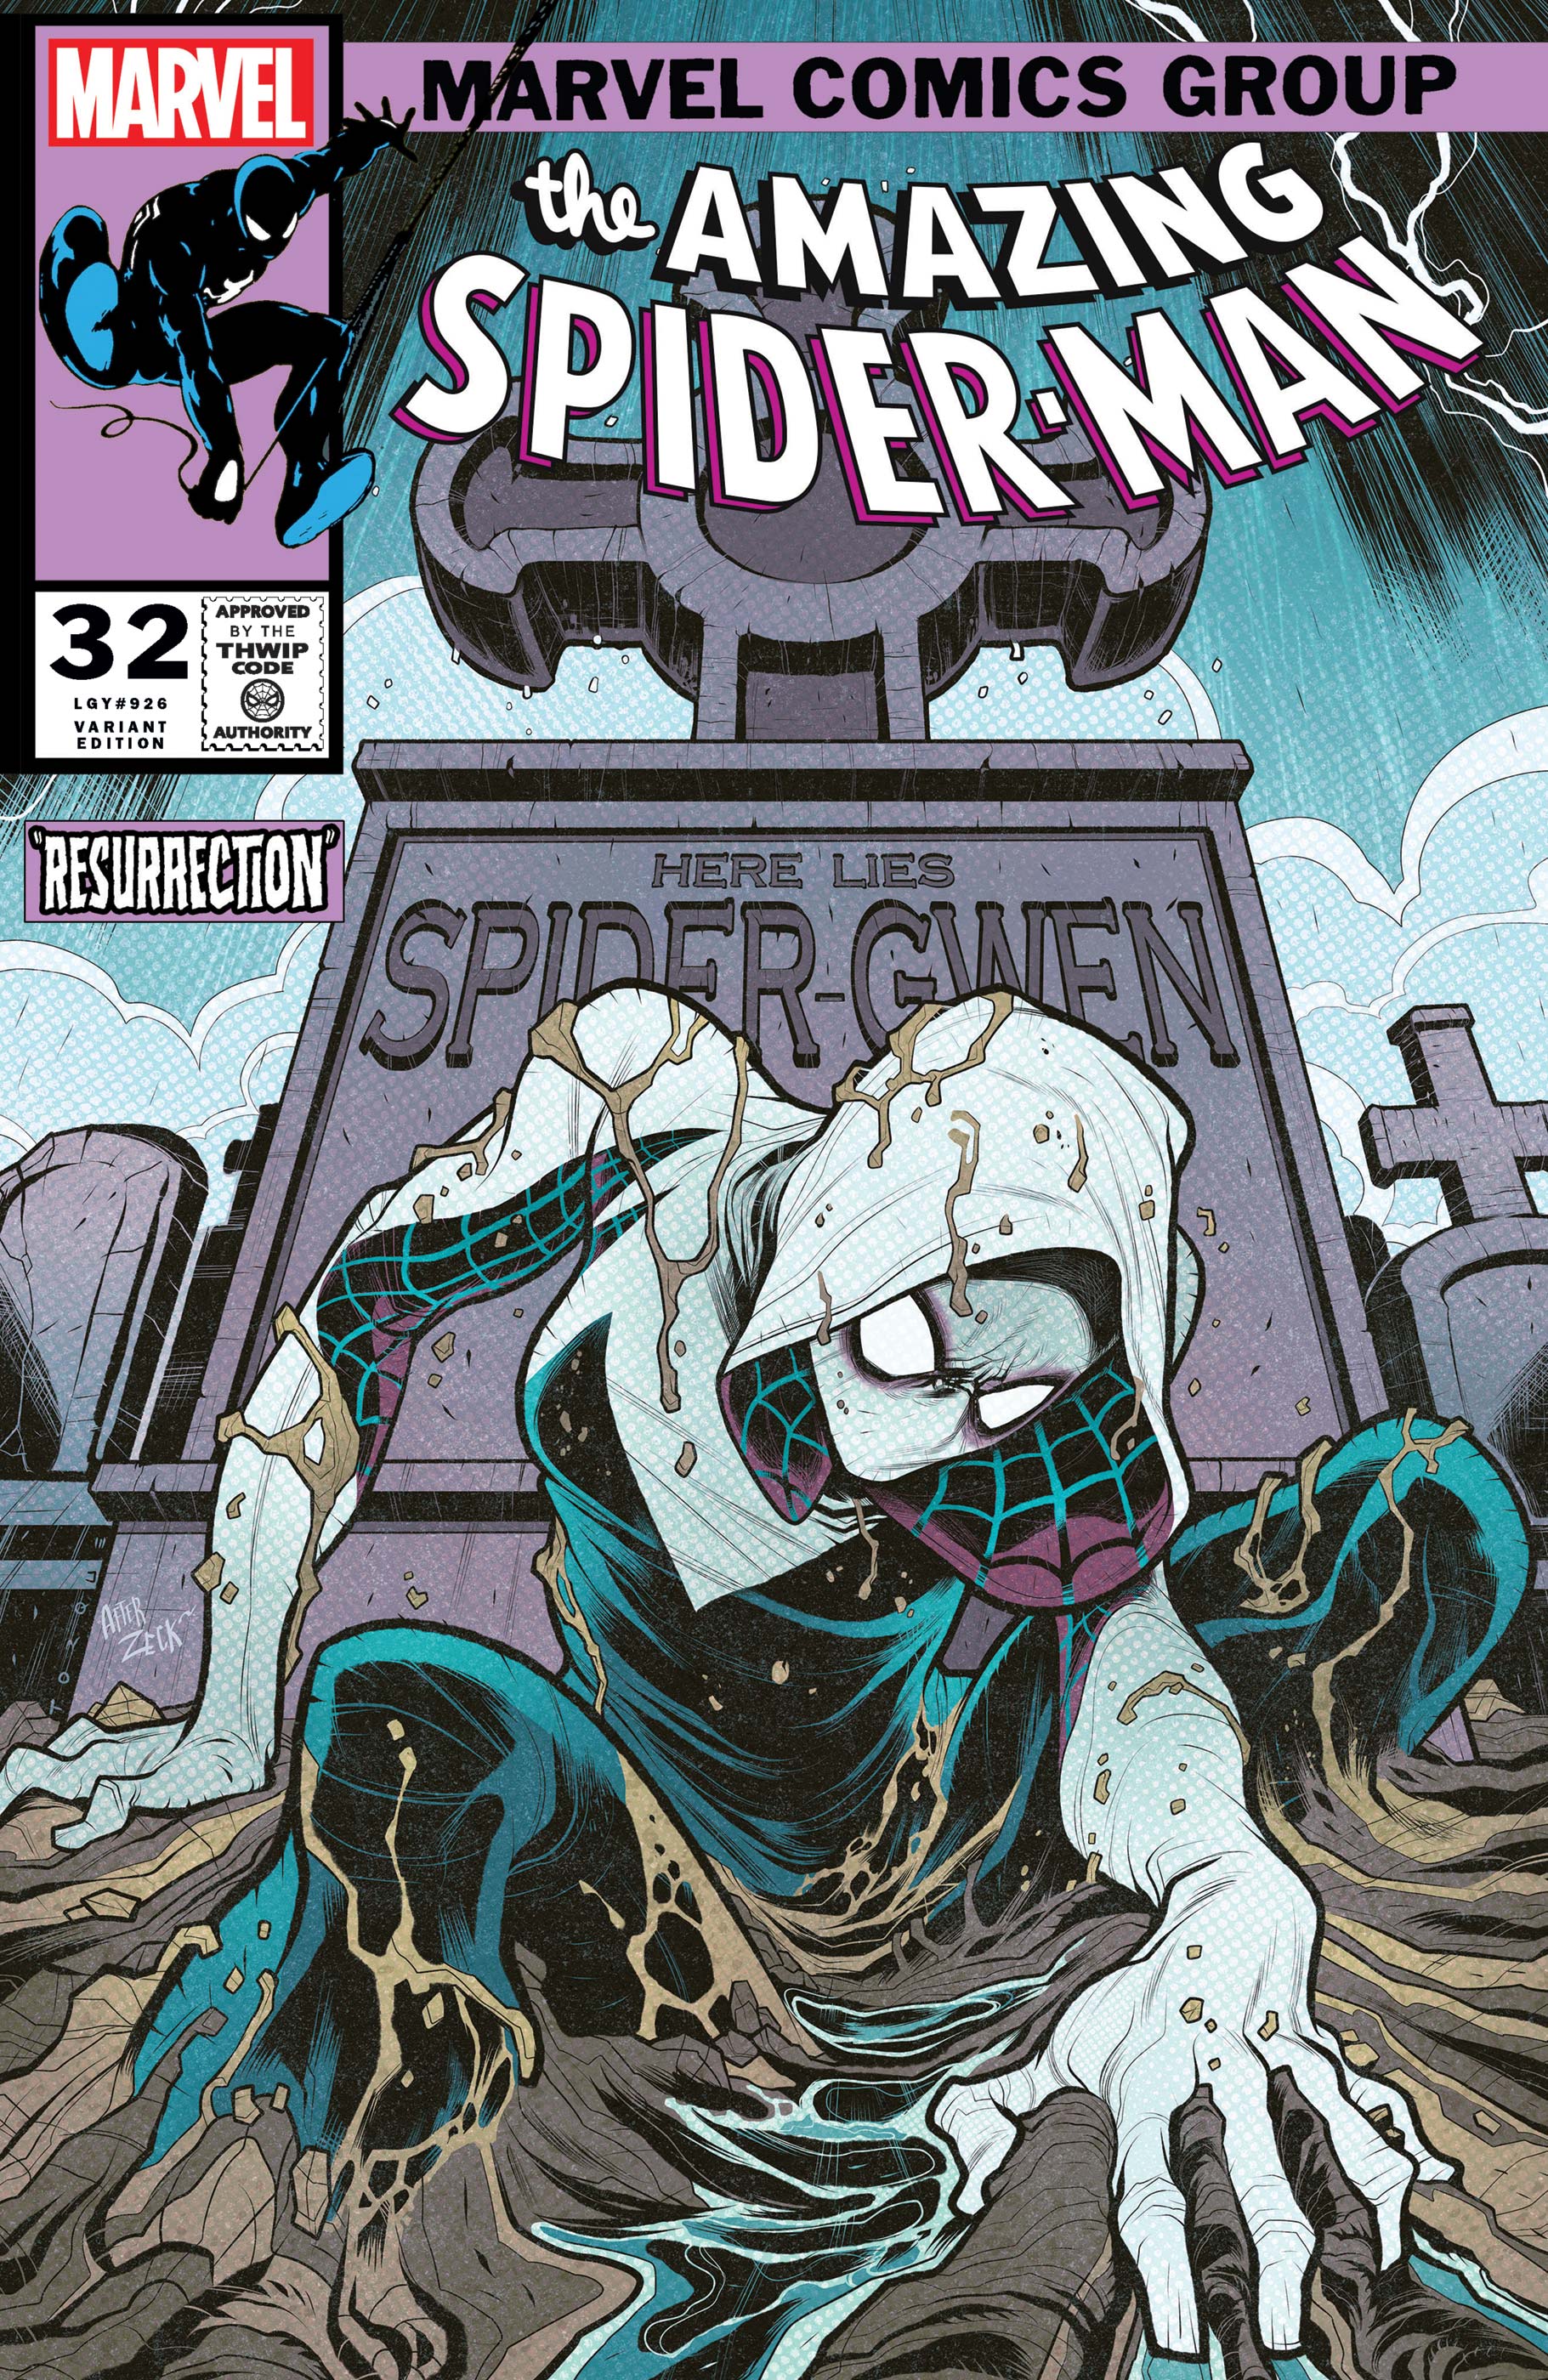 The Amazing Spider-Man (2022) #32 (Variant)